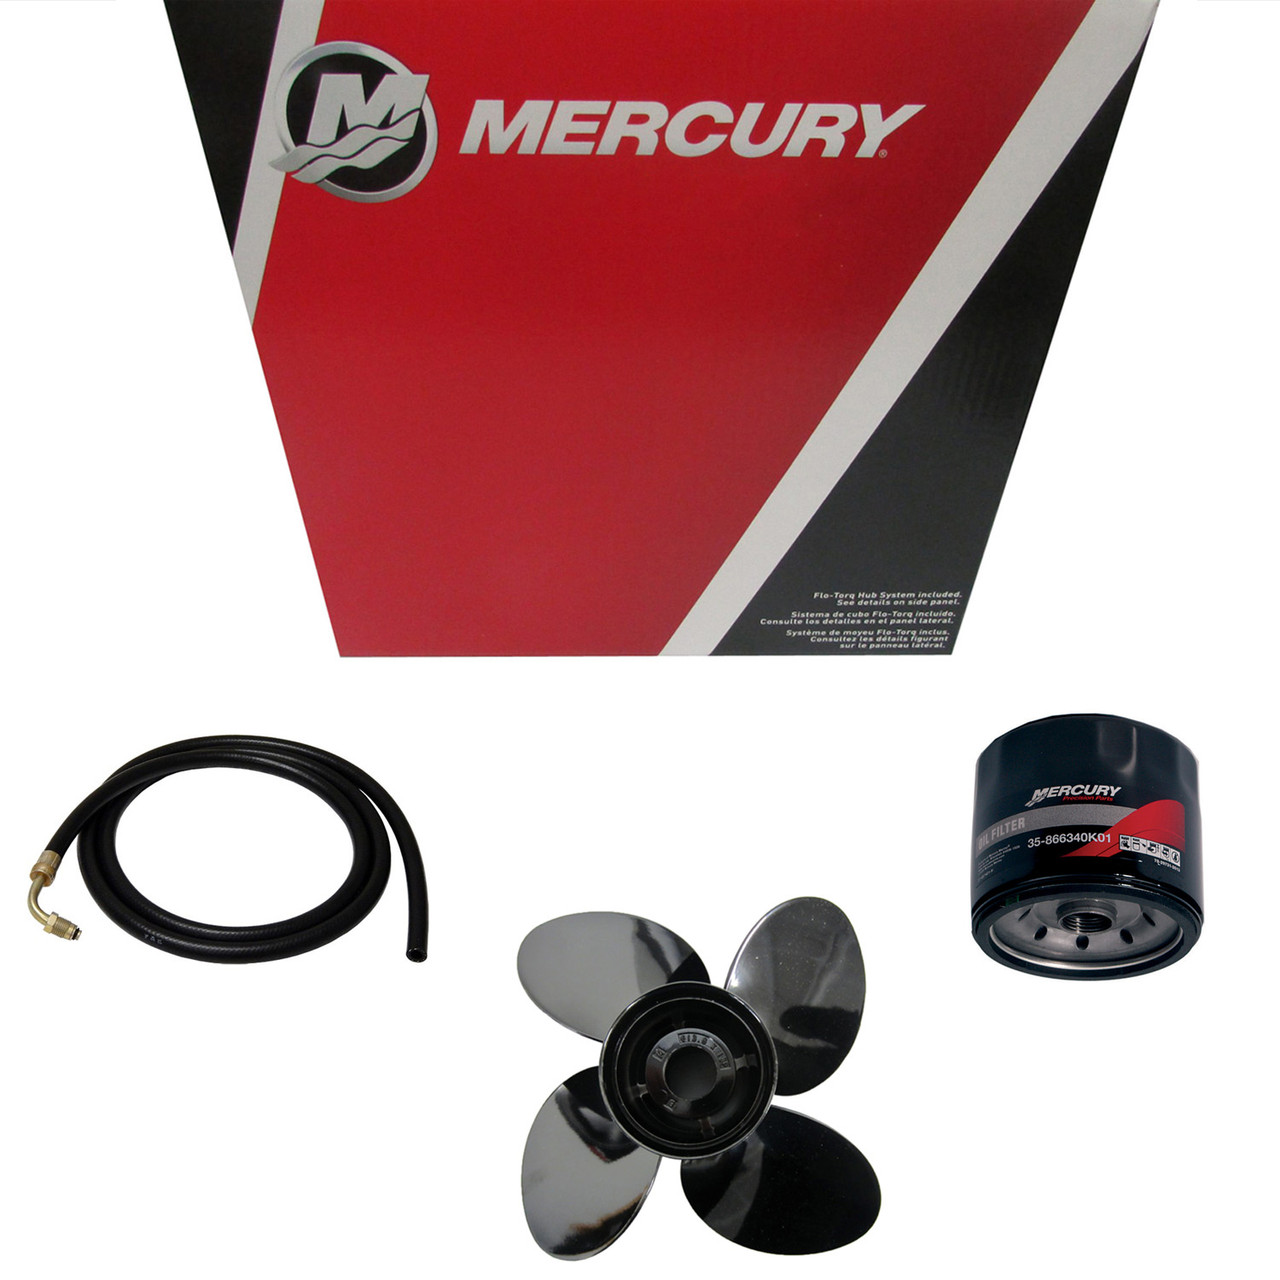 Mercury Marine / Mercruiser New OEM Tool Cup Driver, 91-889623